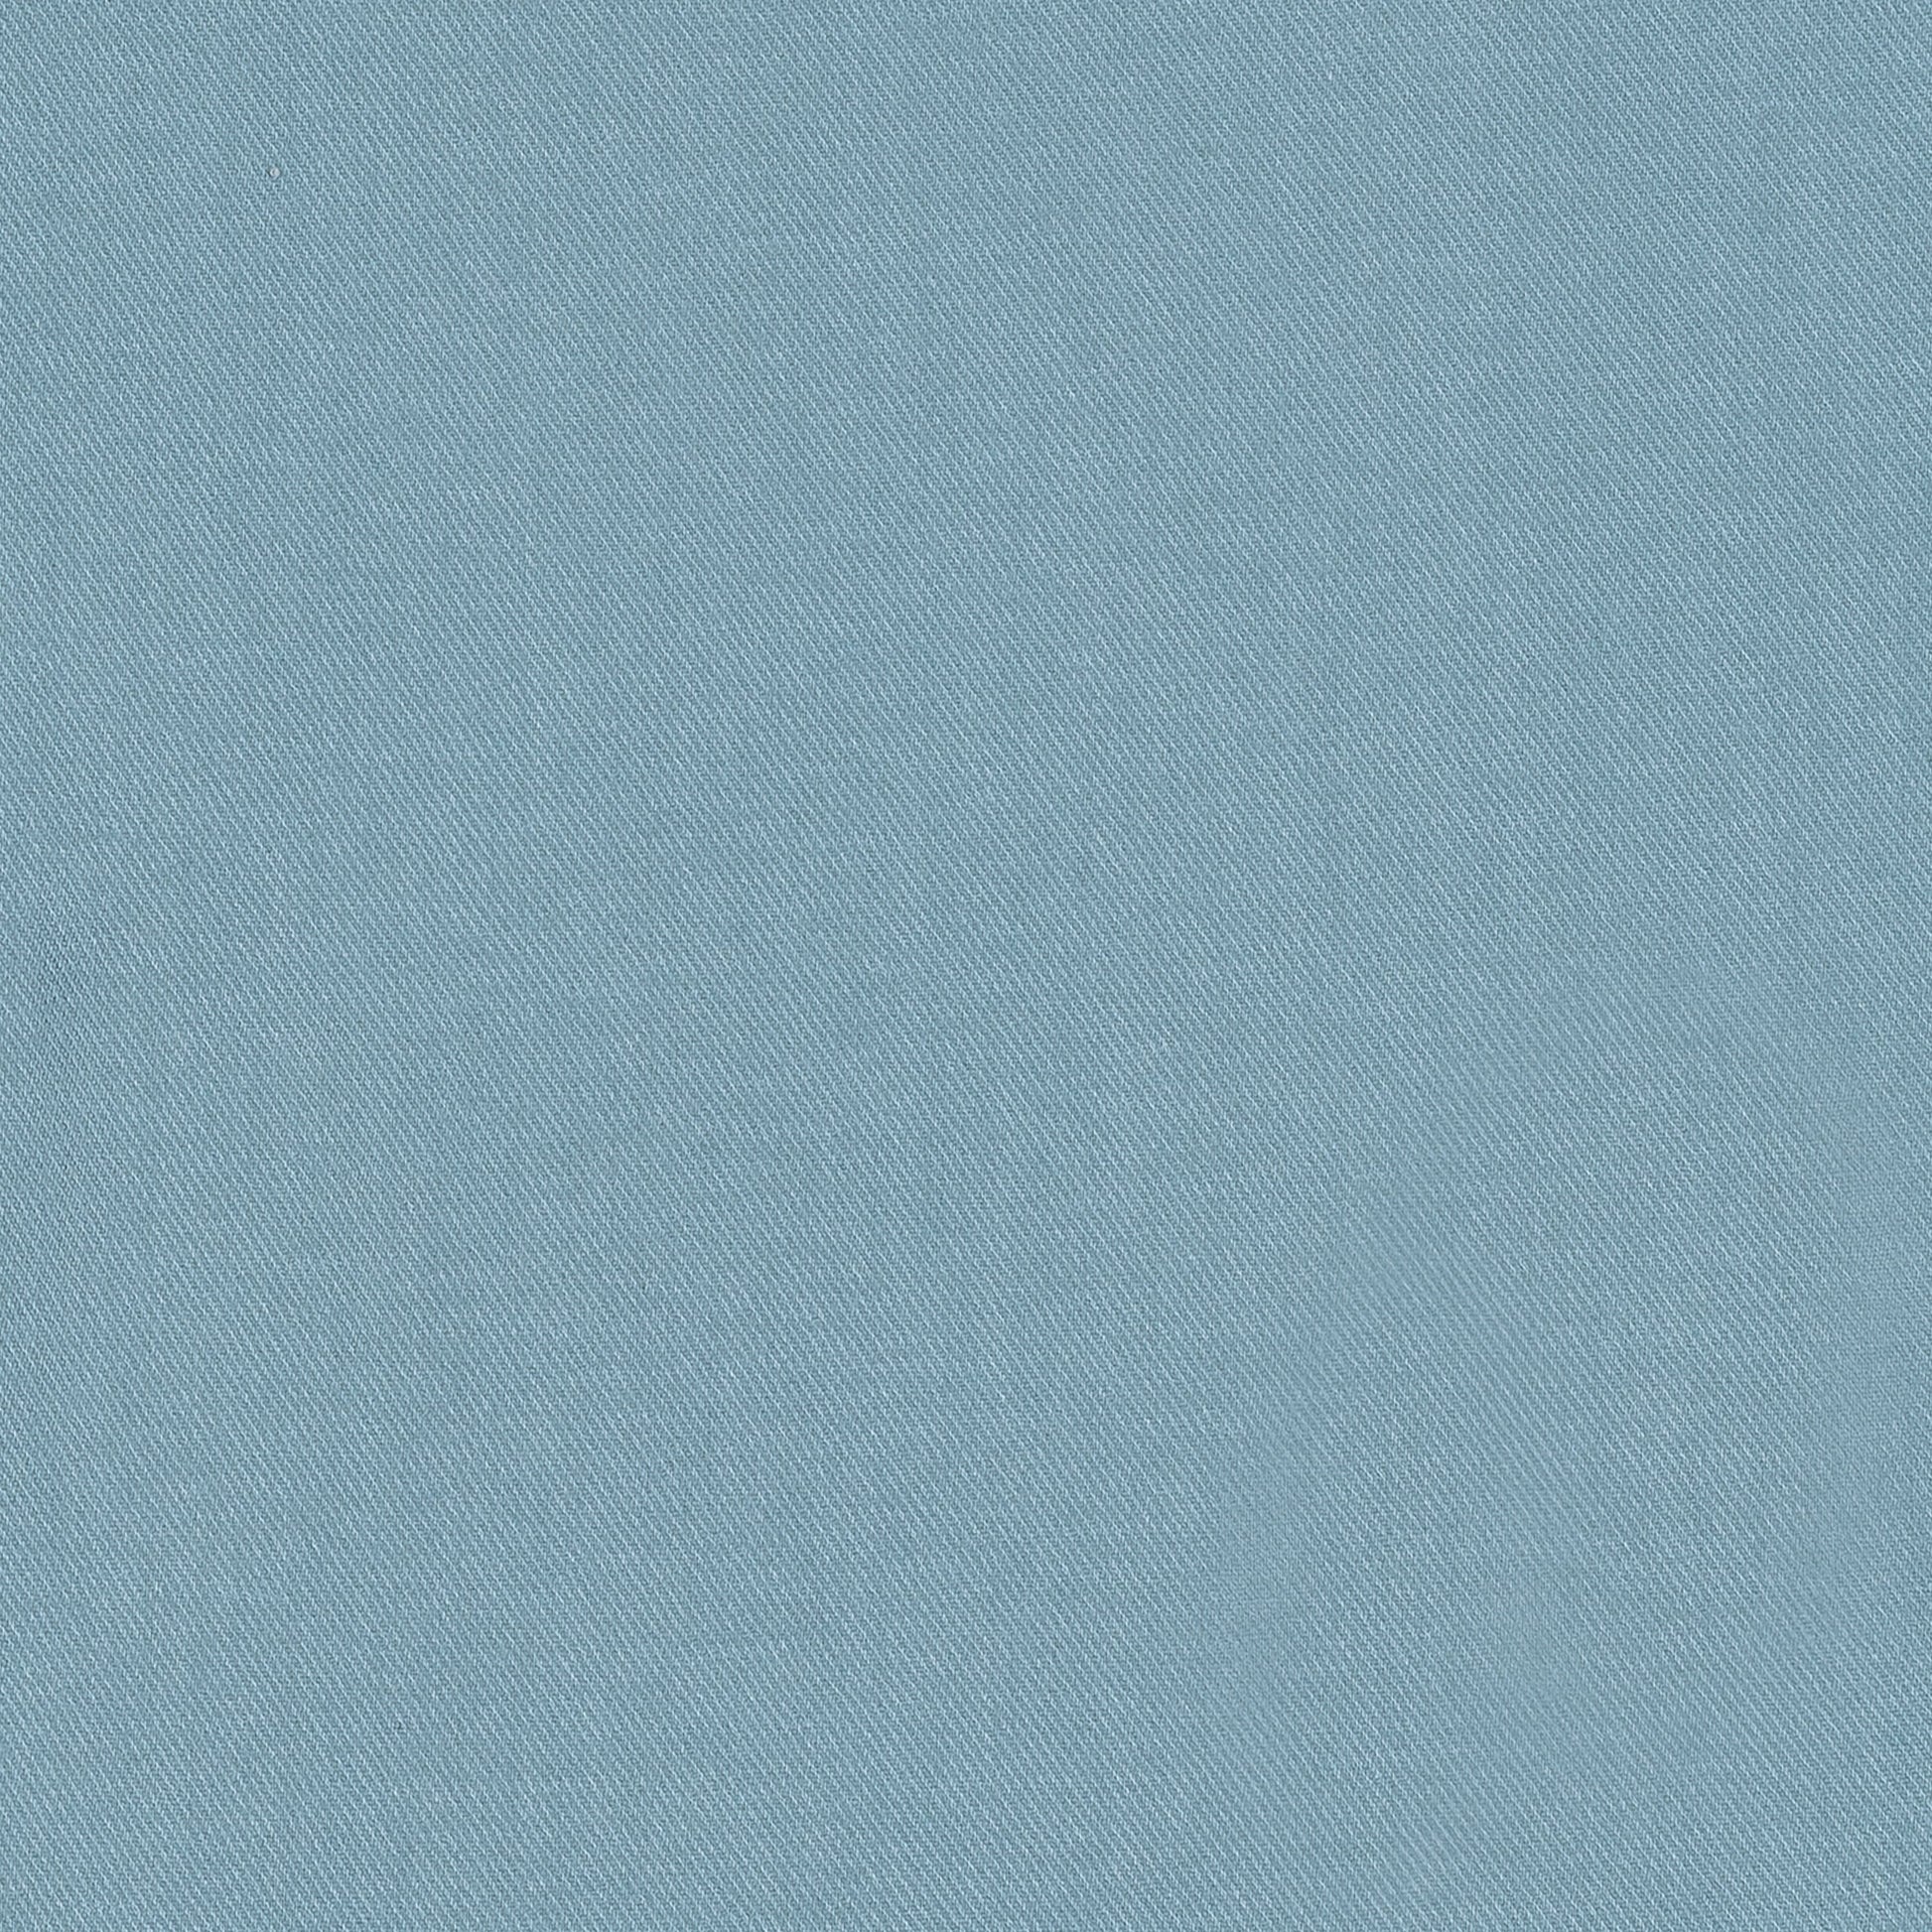 Blank Slate blue color